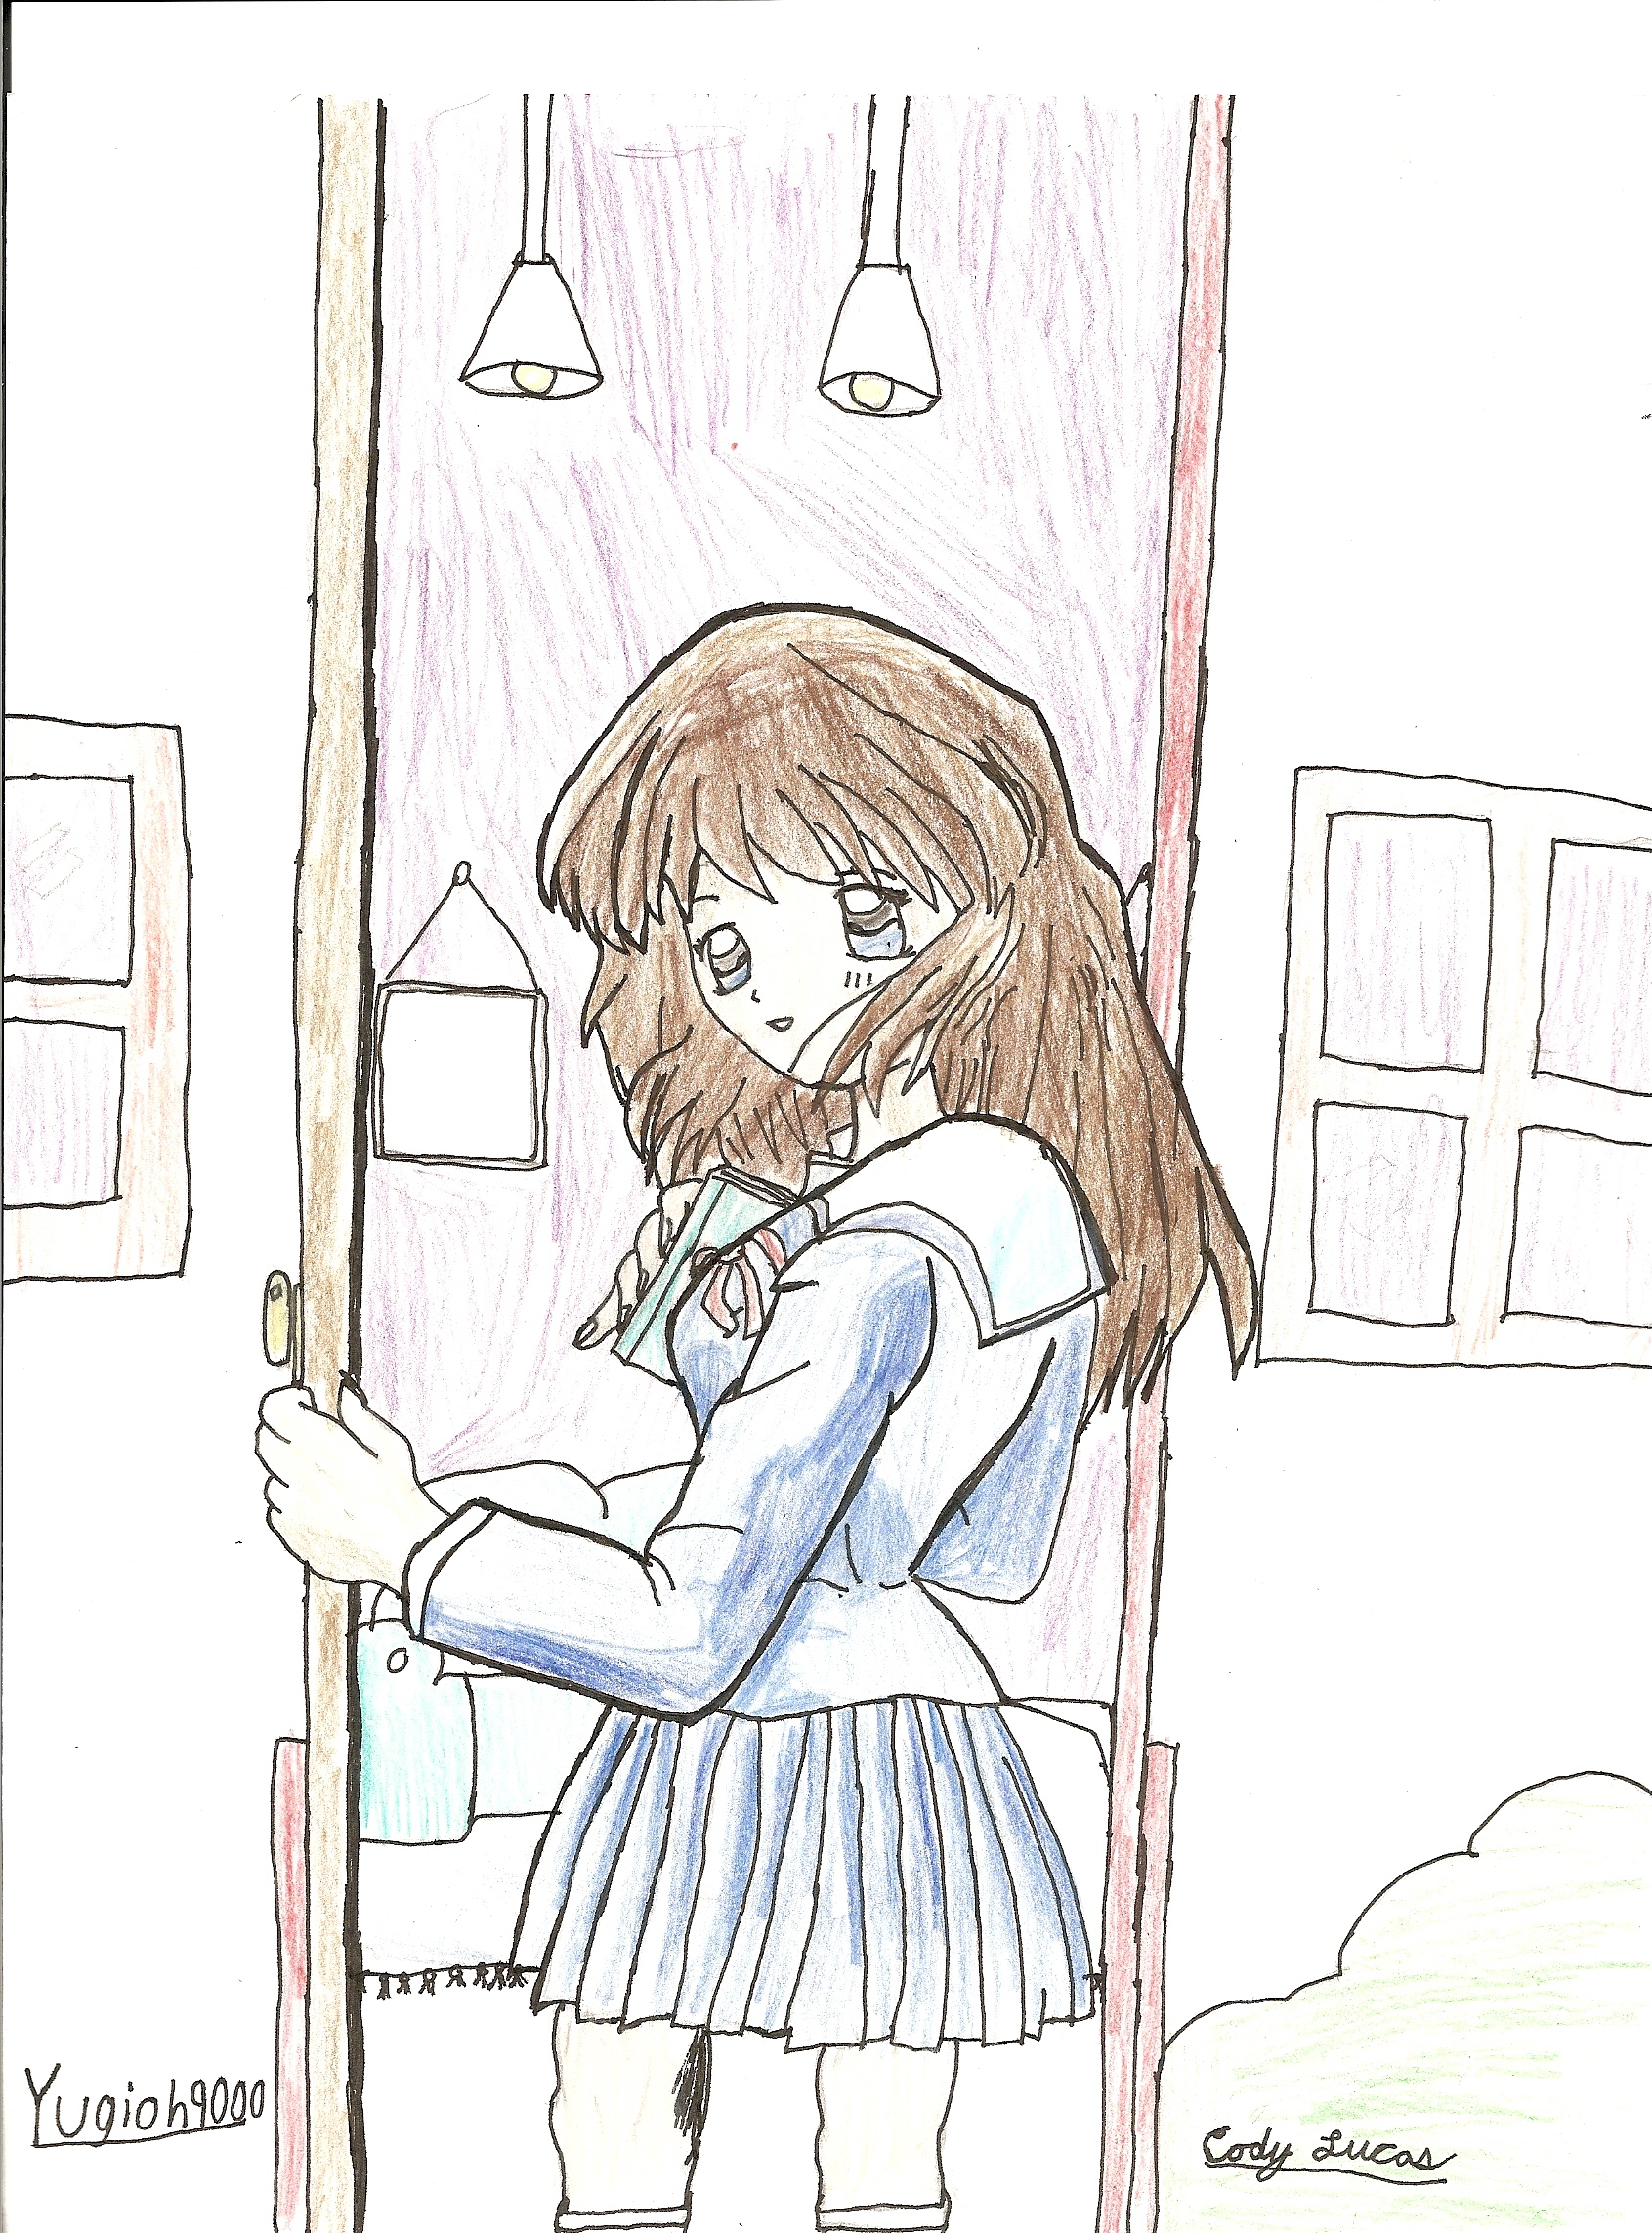 Random anime schoolgirl by Yugioh9000